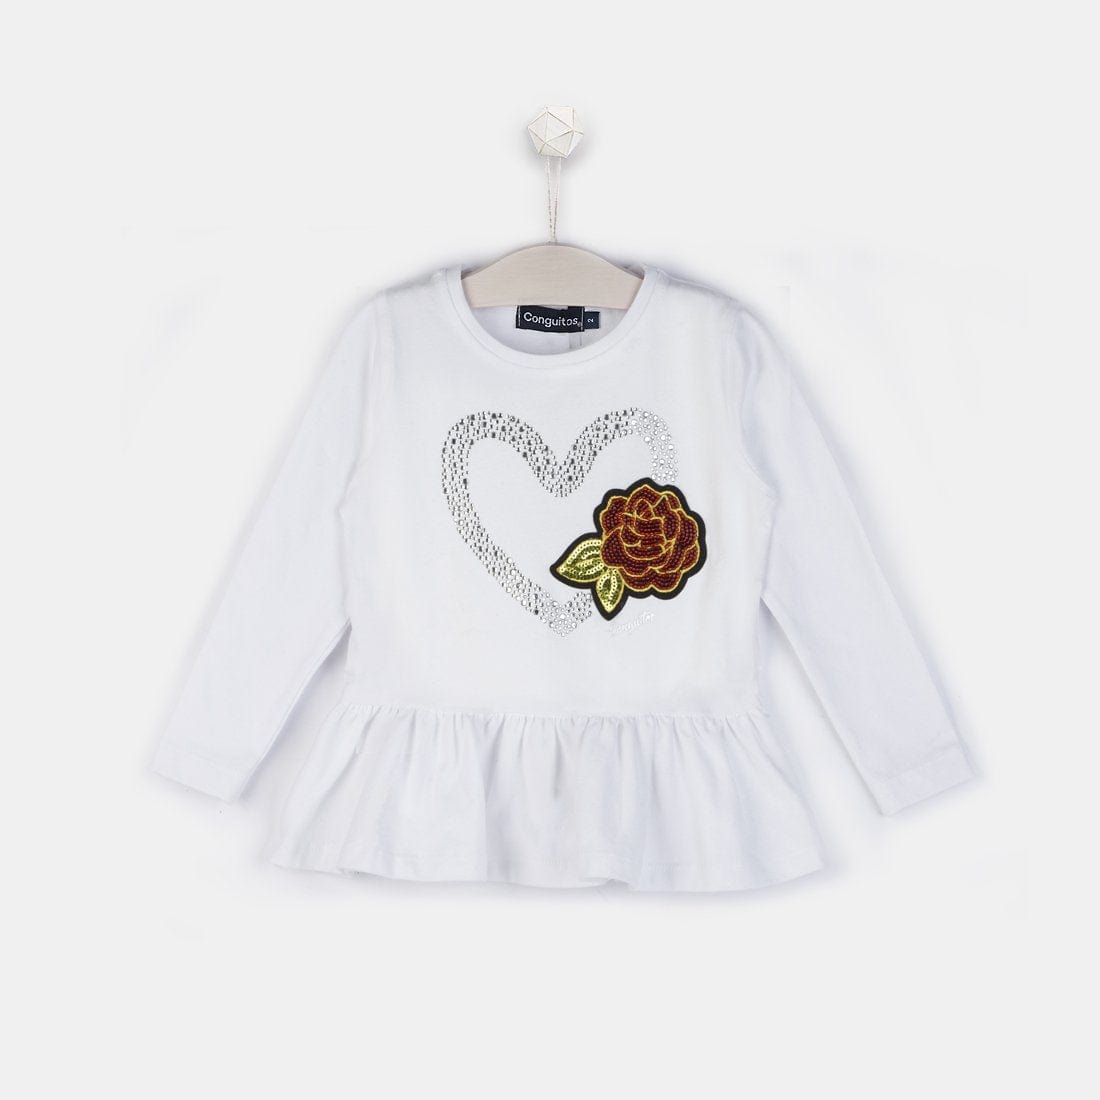 CONGUITOS TEXTIL Clothing Girls "Heart" Peplum Hem White T-shirt